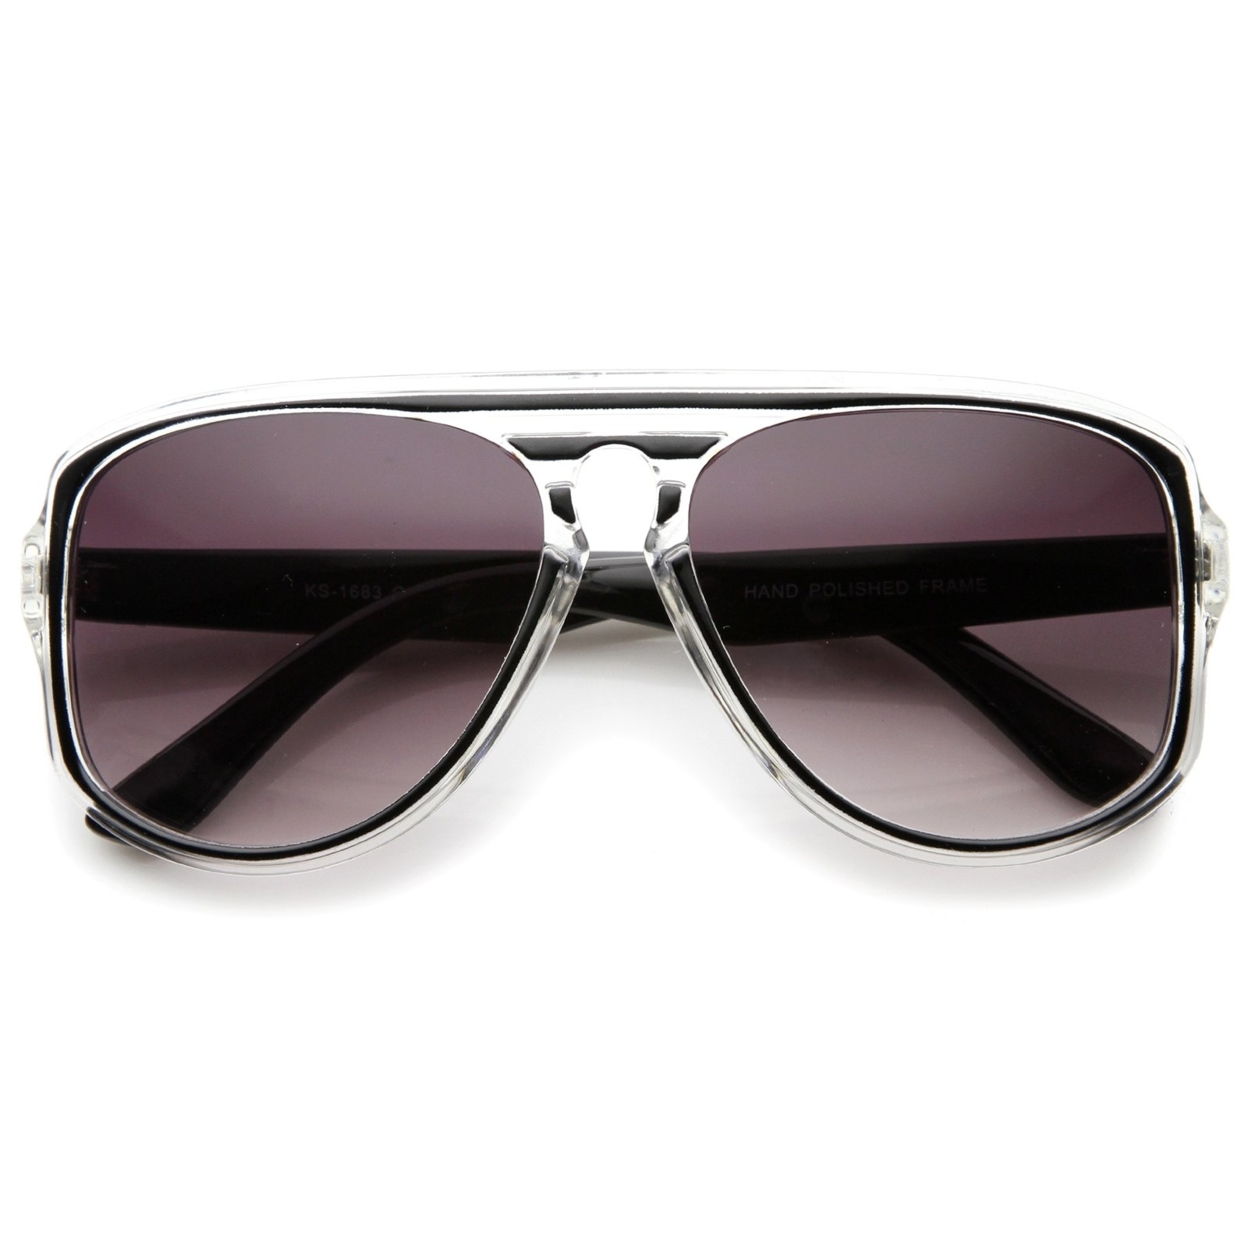 Modern Translucent Frame Keyhole Flat Top Square Aviator Sunglasses 46mm - Tortoise / Amber